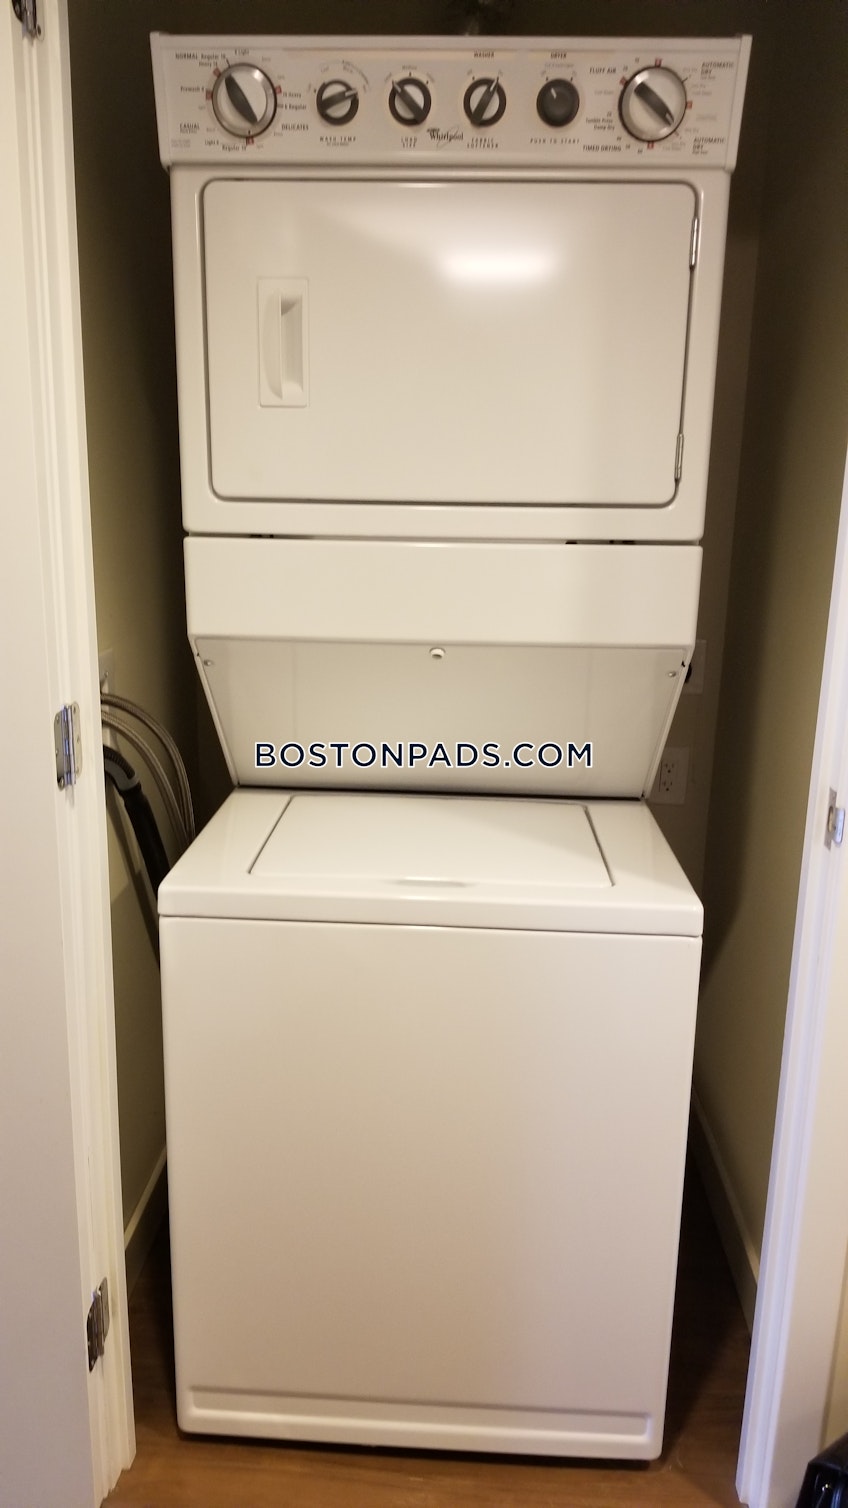 Boston - $3,405 /month